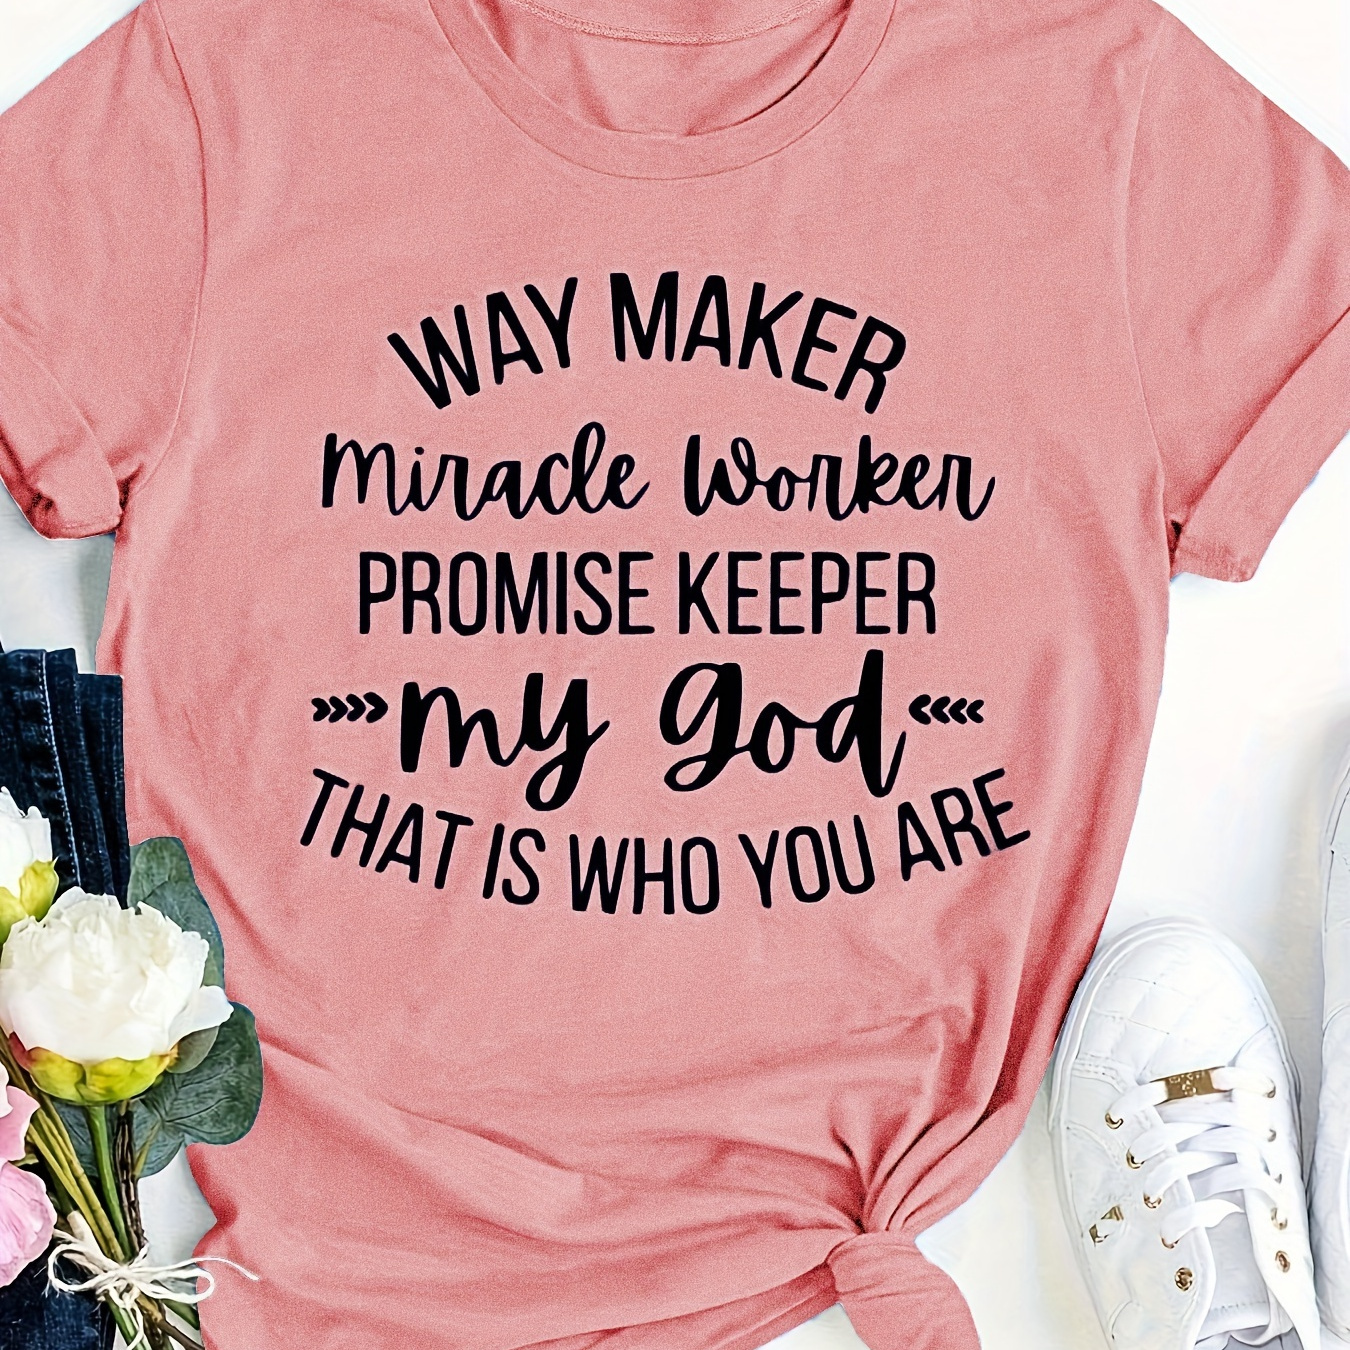 

Way Maker Letter Print T-shirt, Casual Crew Neck Short Sleeve Summer T-shirt, Women's Clothing